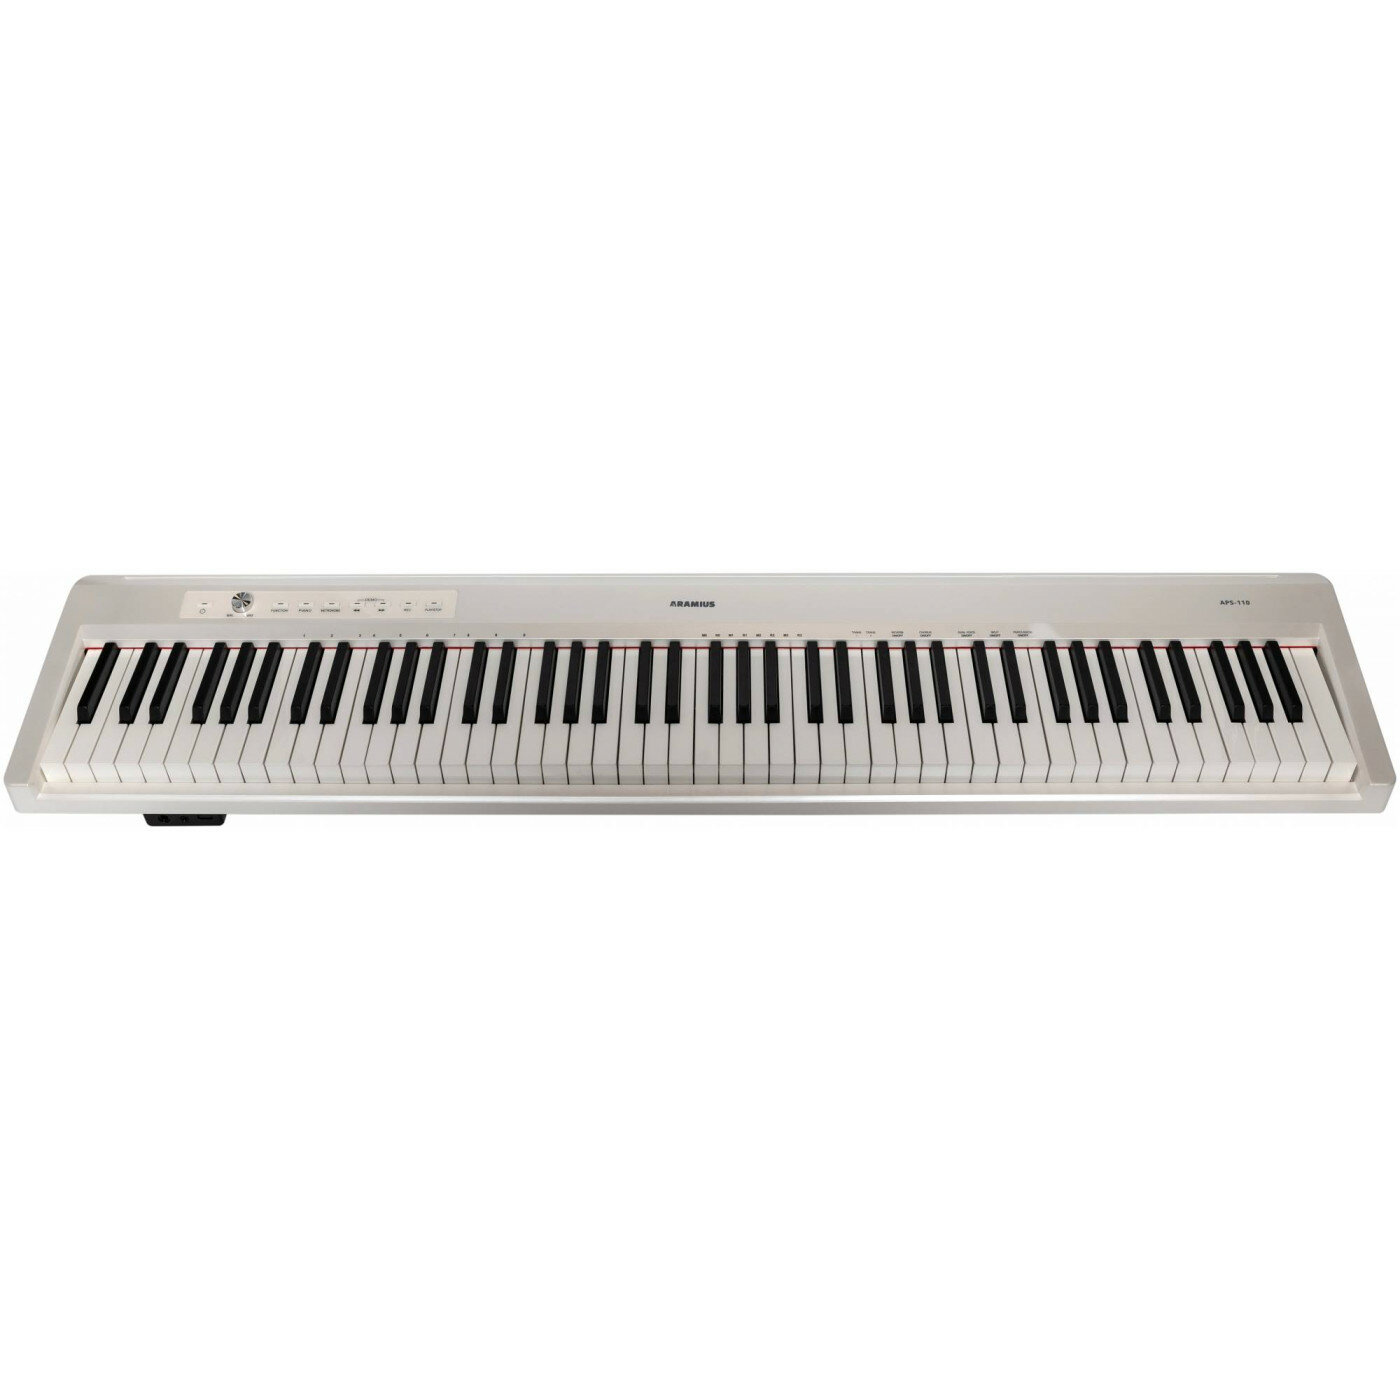 ARAMIUS APS-110 WH Пианино цифровое компактное